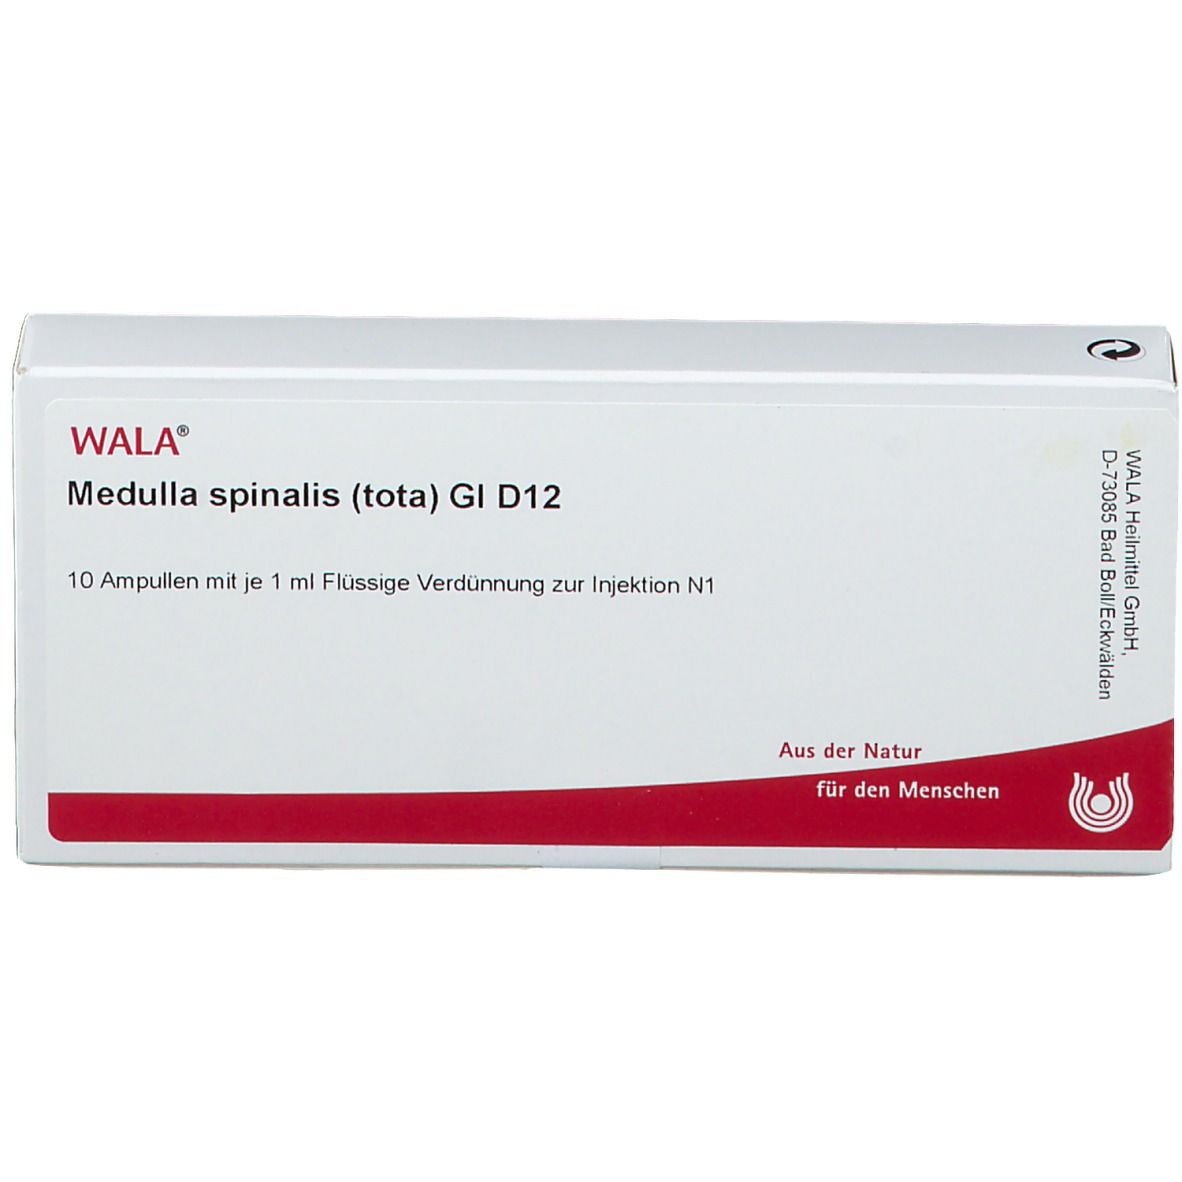 WALA® Medulla spinalis tota Gl D 12